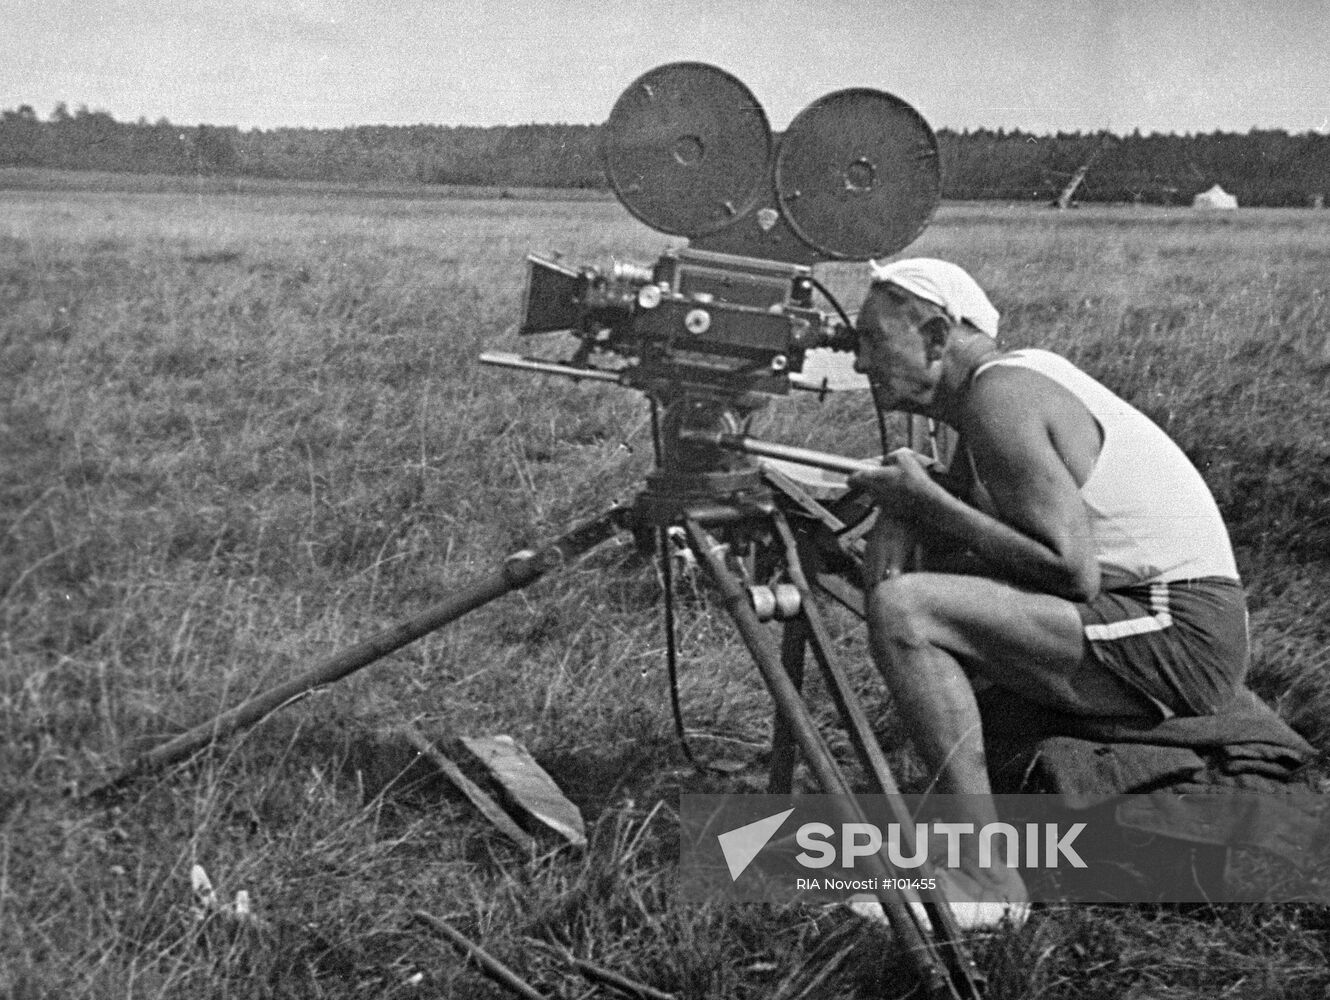 FILM DIRECTOR PUDOVKIN SHOOTING